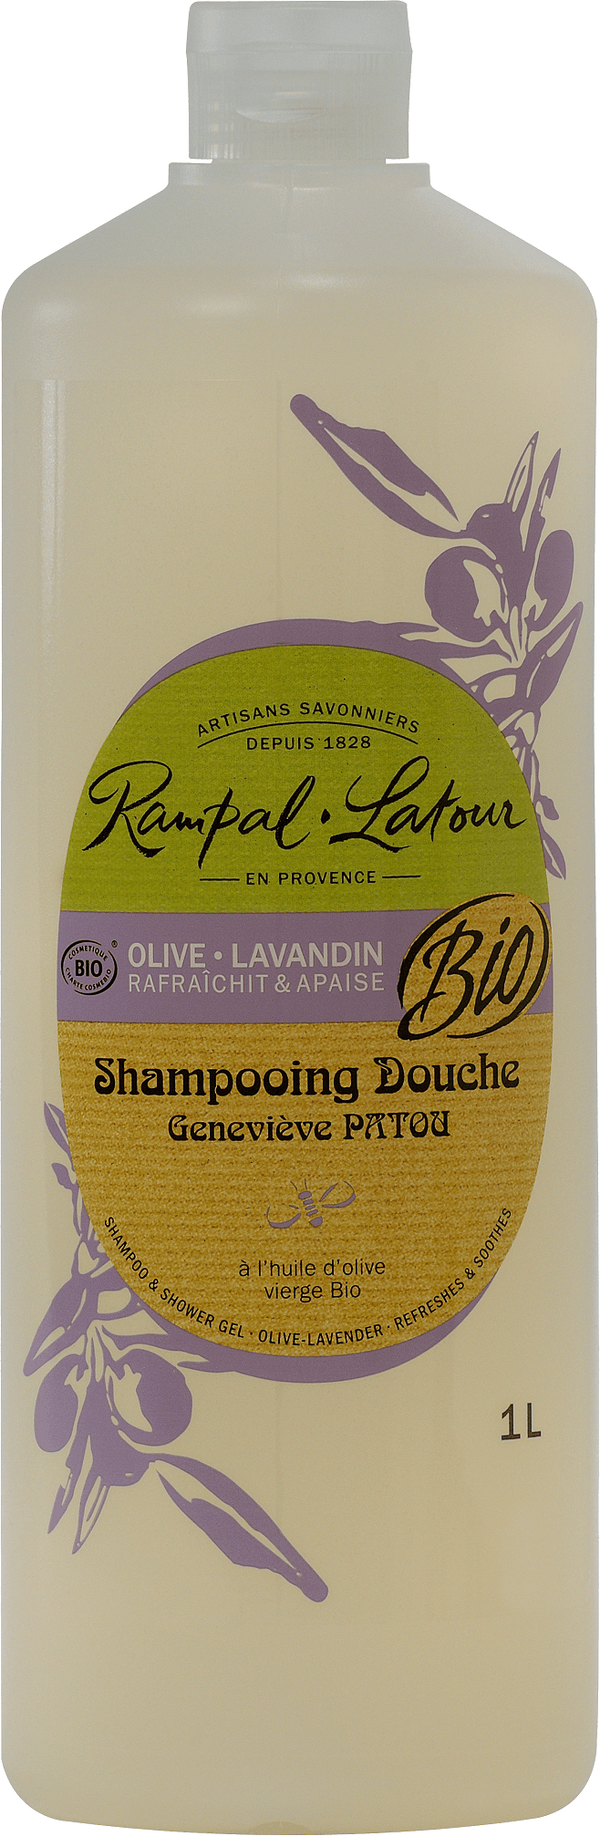 Bio Dusch-Shampoo Olive-Lavandin 1 Liter - Rampal Latour